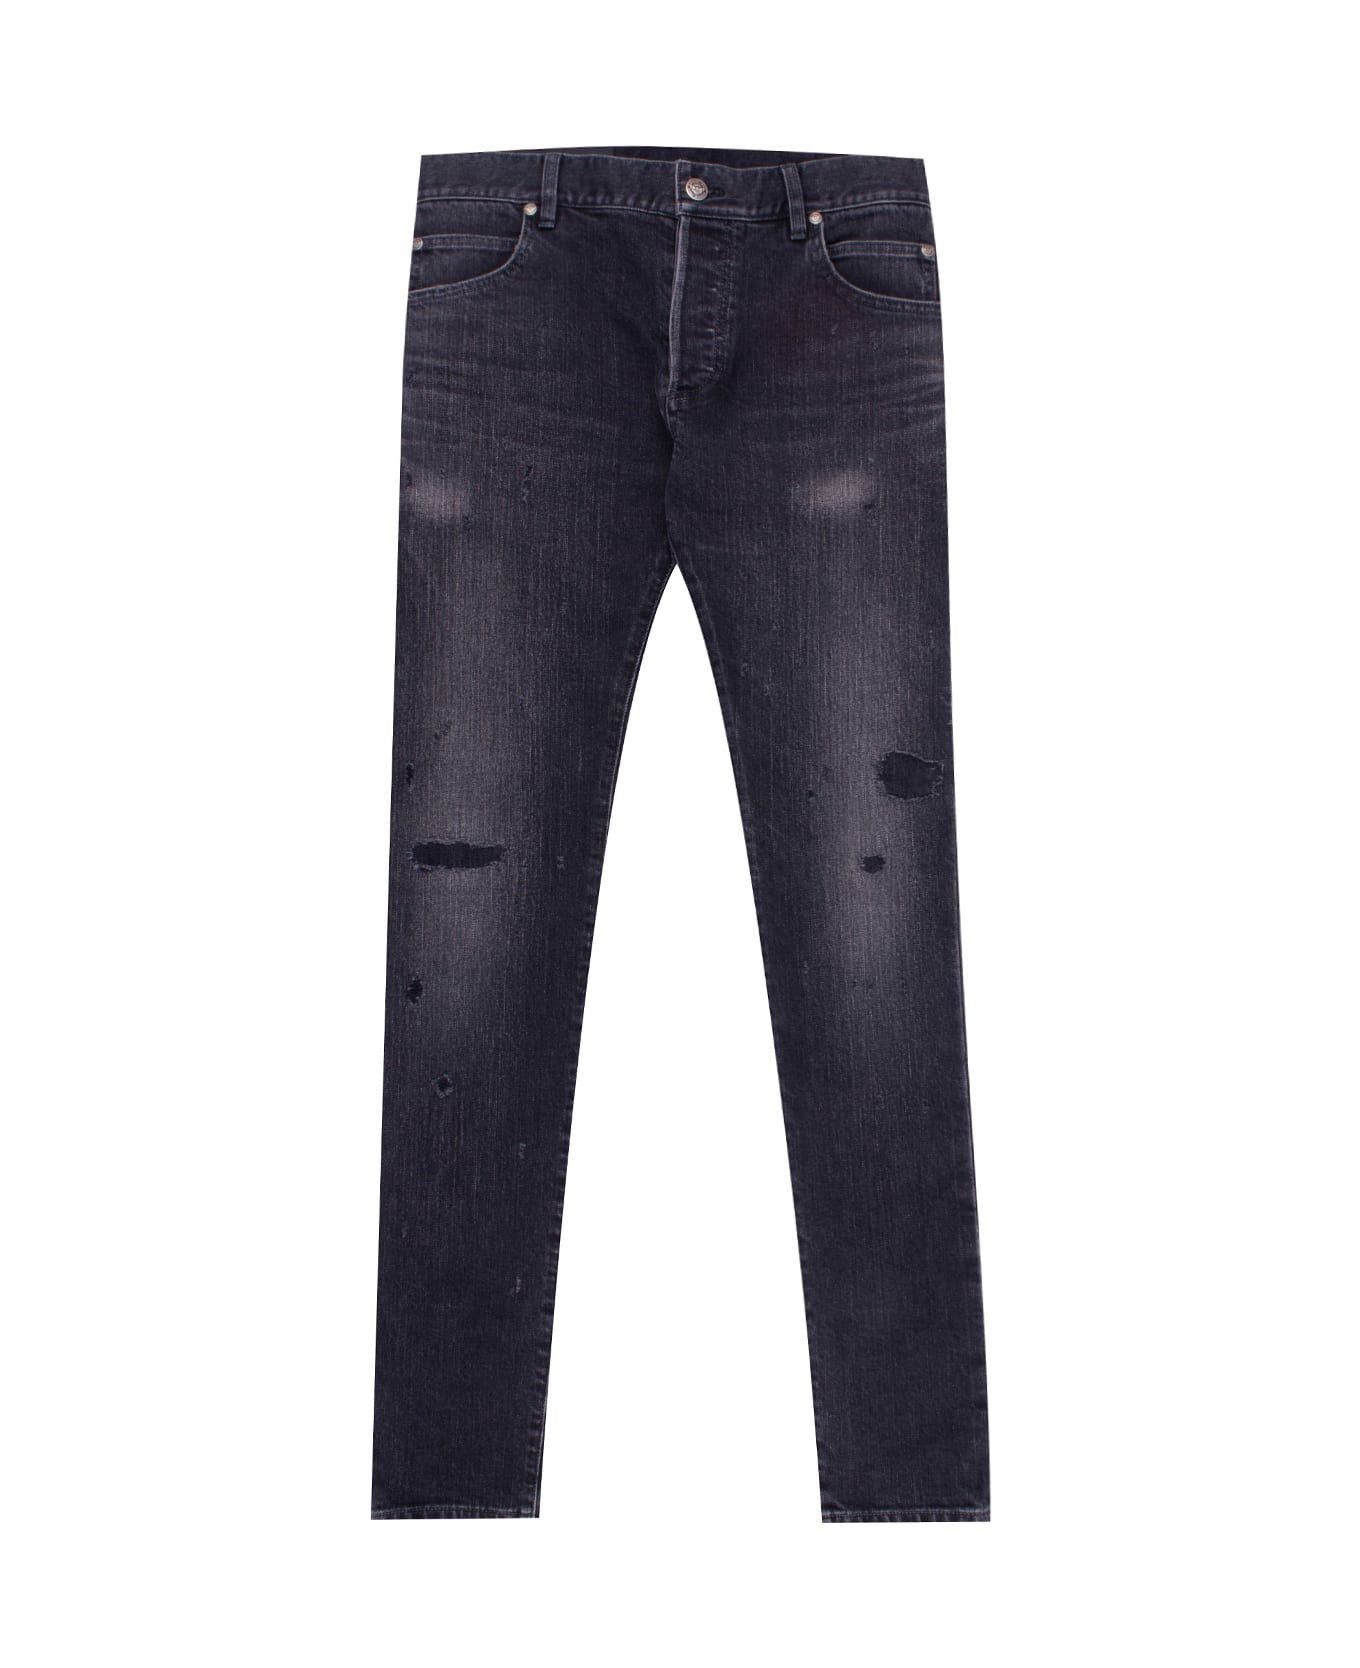 Balmain Cotton Jeans - Black デニム